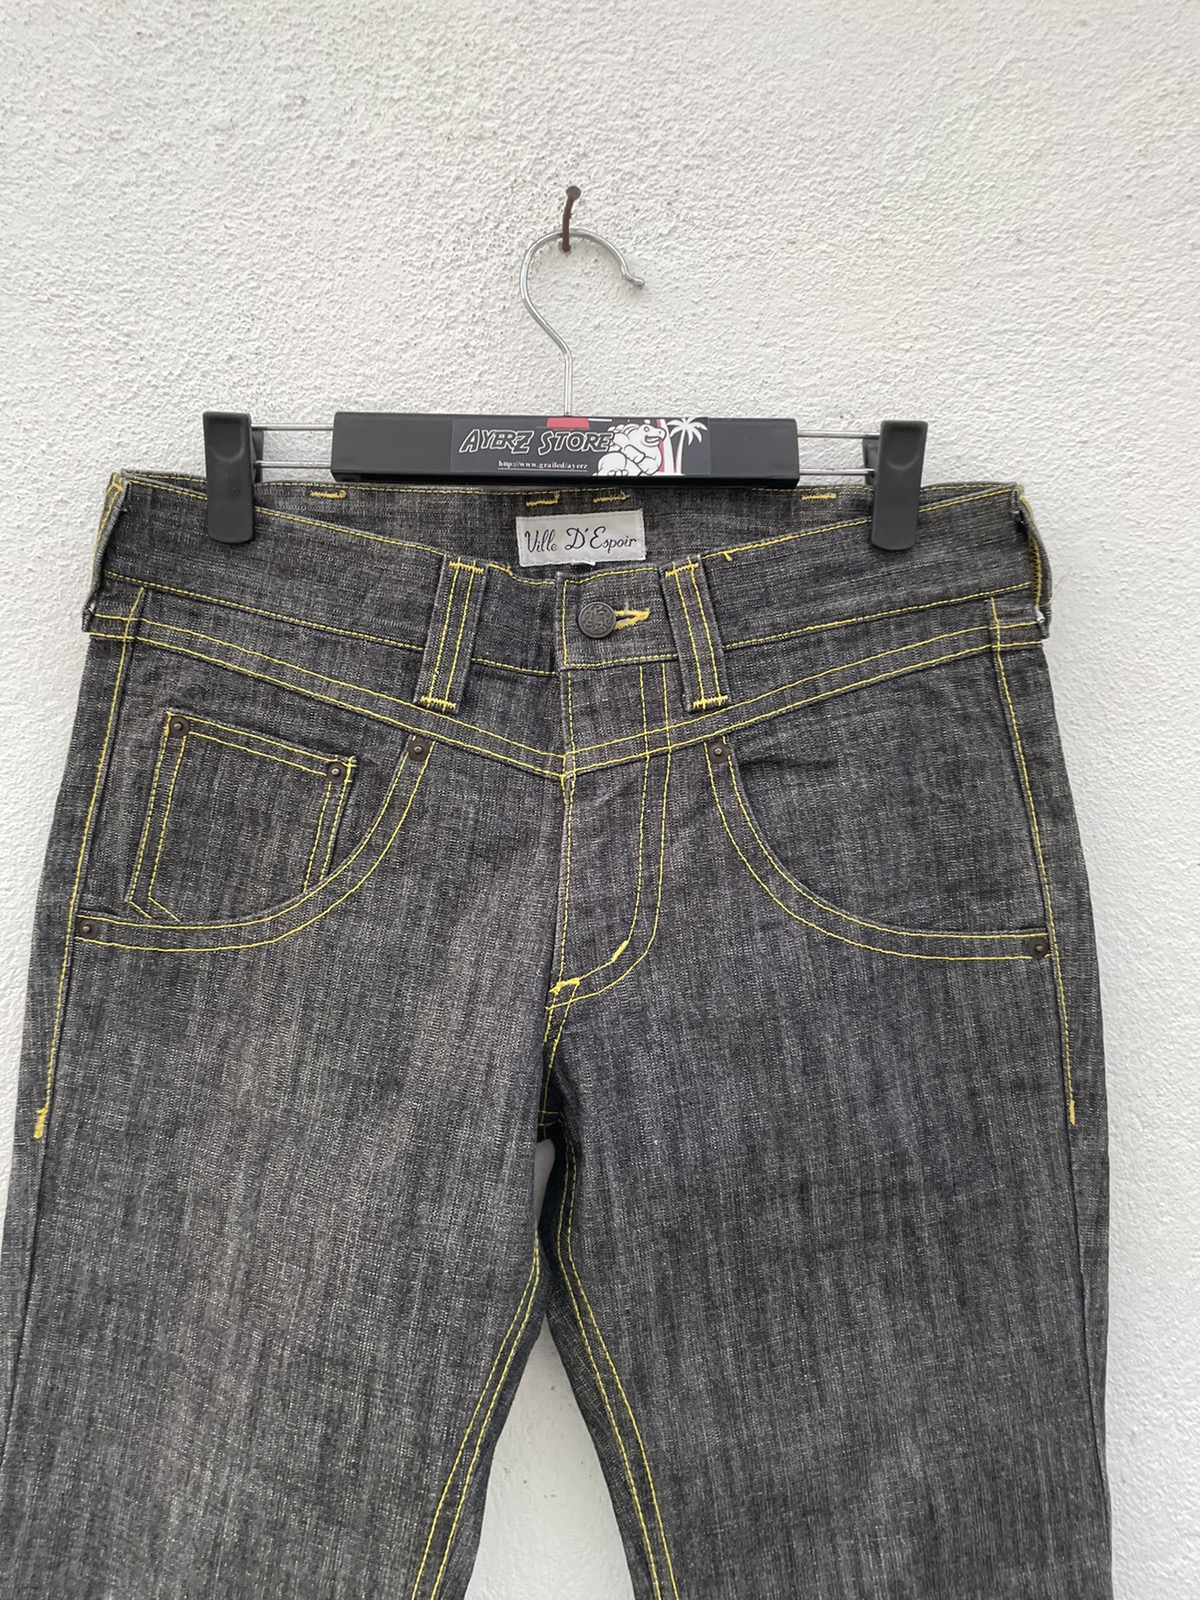 Flare Jeans Ville D’Espoir denim Jeans Made in Japan - 2